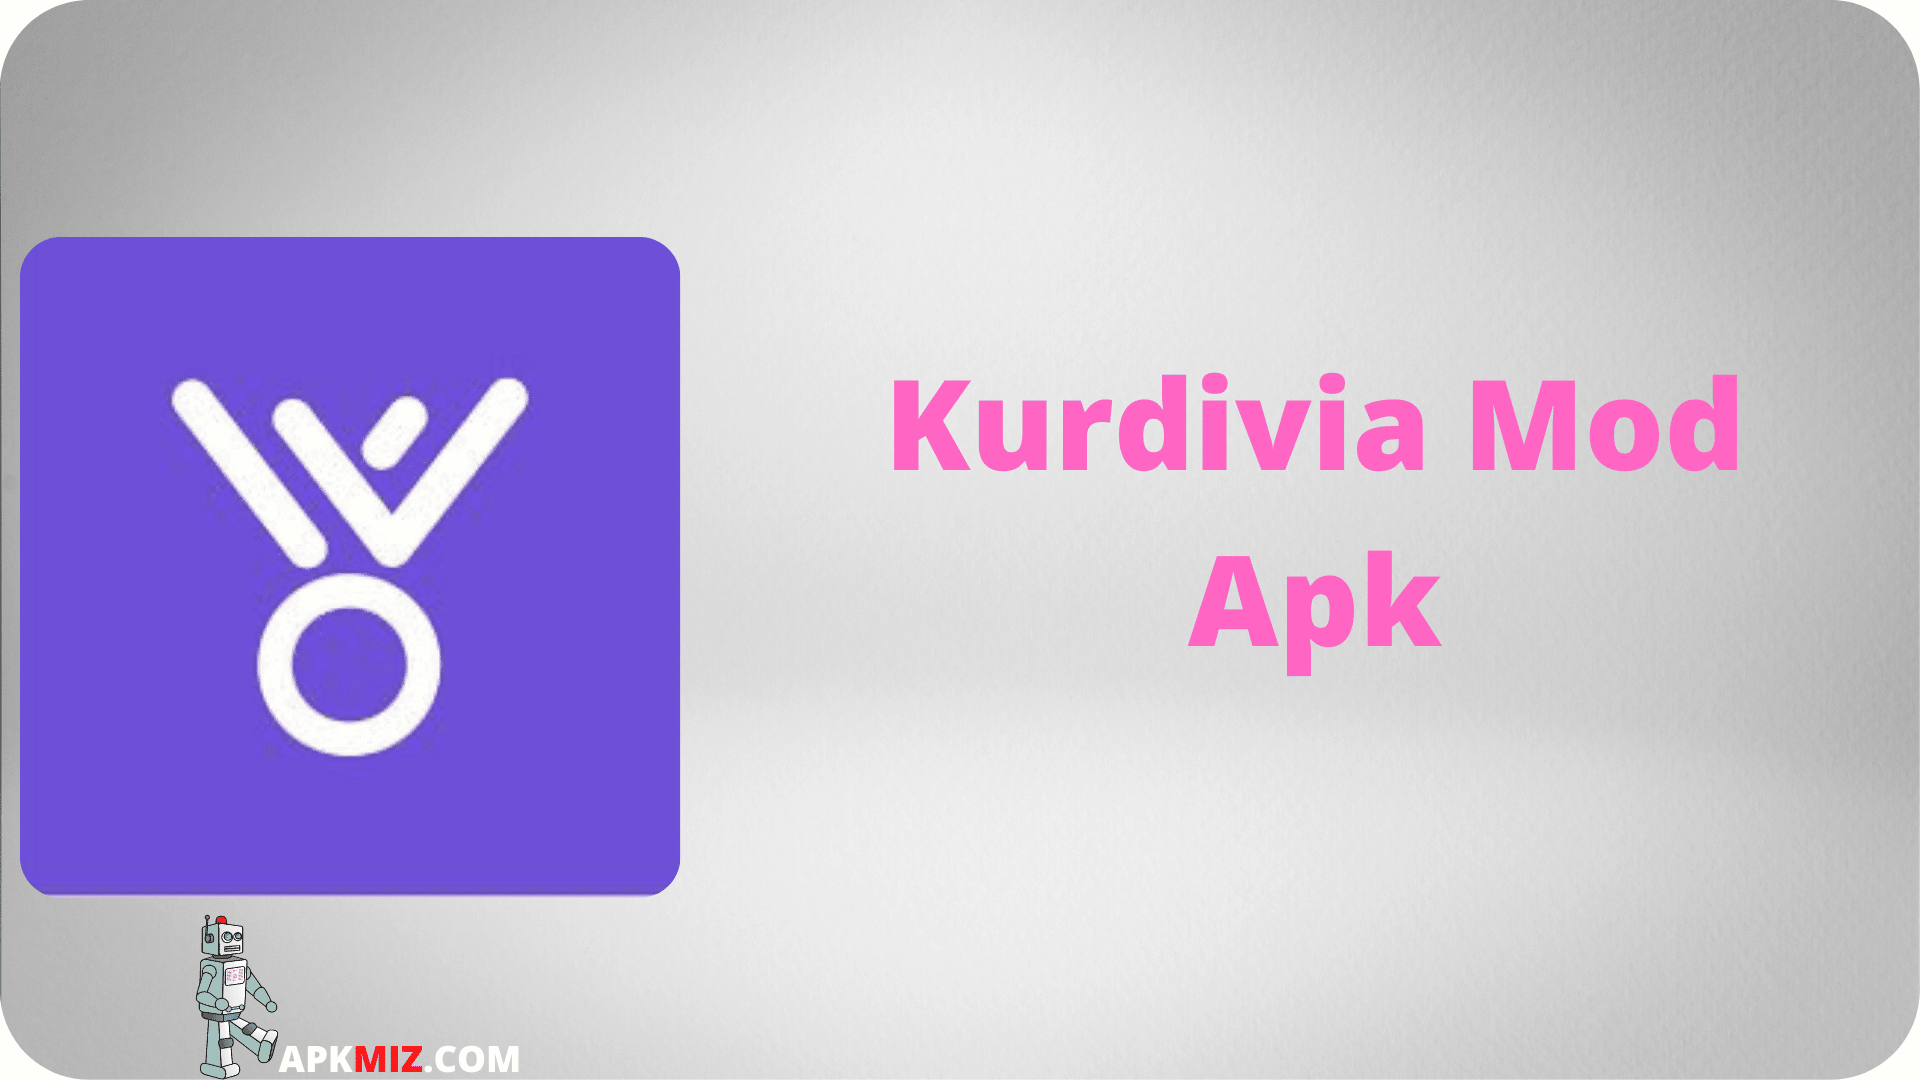 Kurdivia Mod Apk